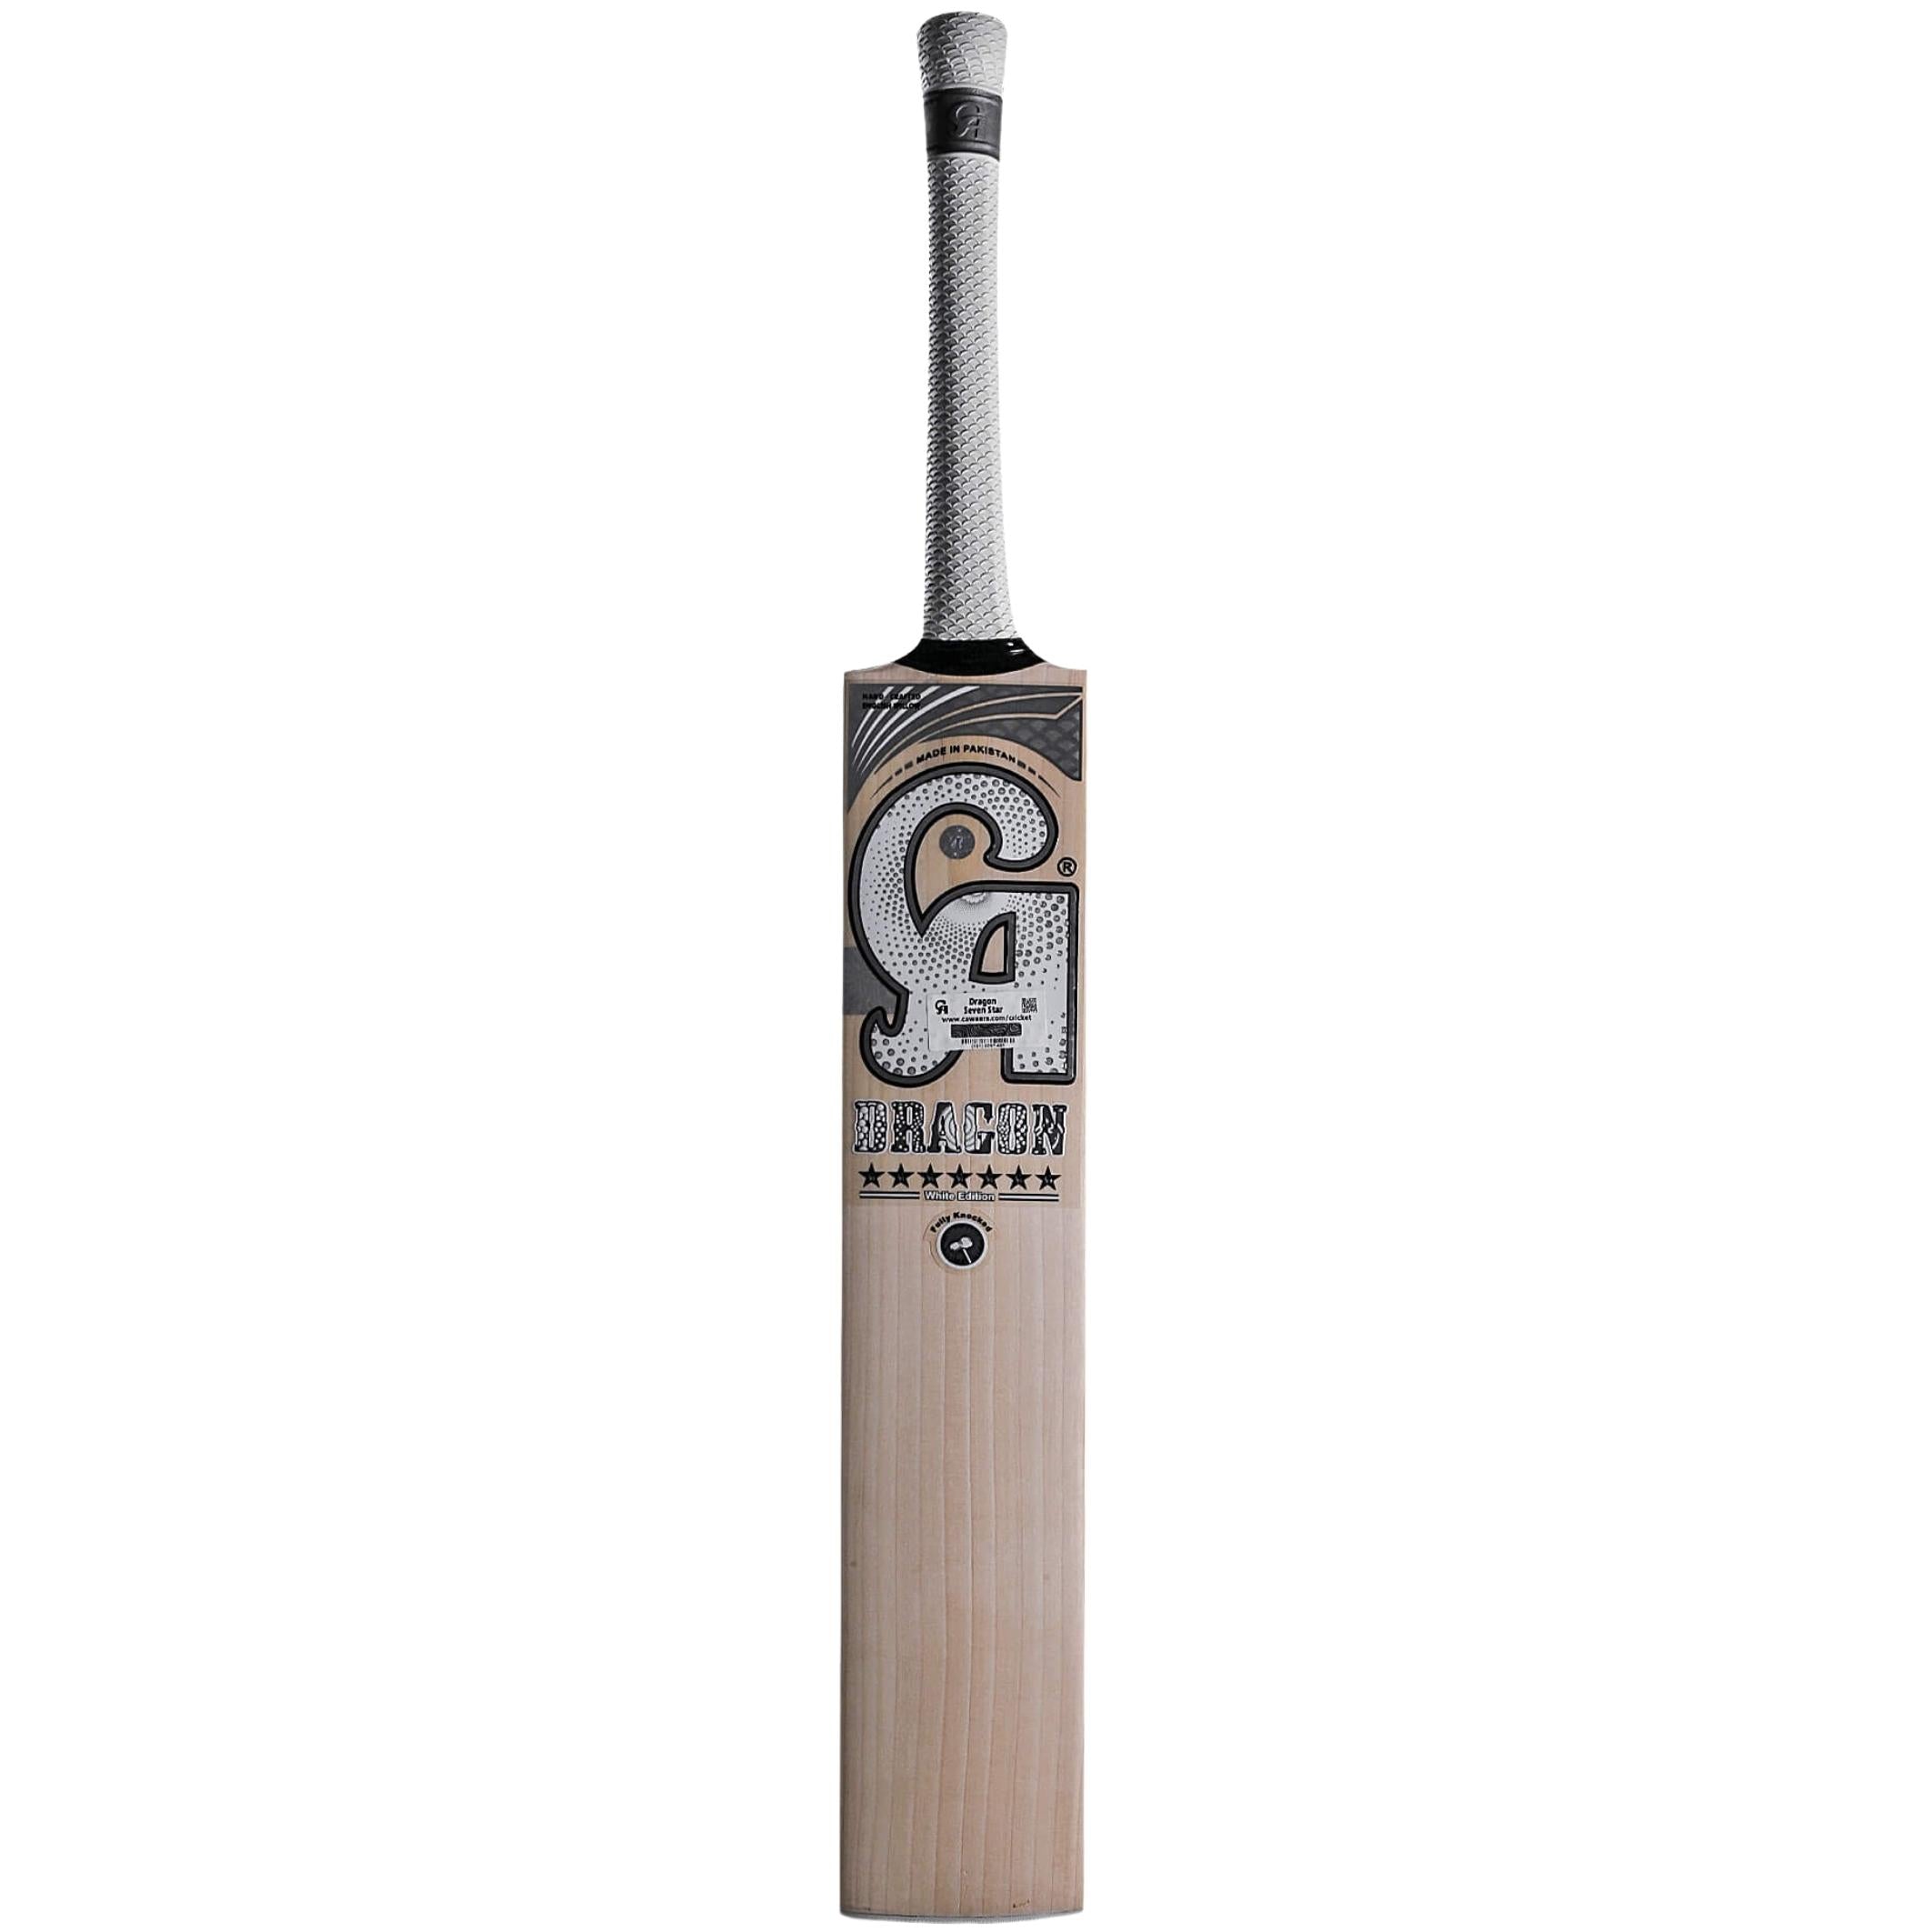 CA Cricket Bat, Model White Dragon 7-Star, English Willow